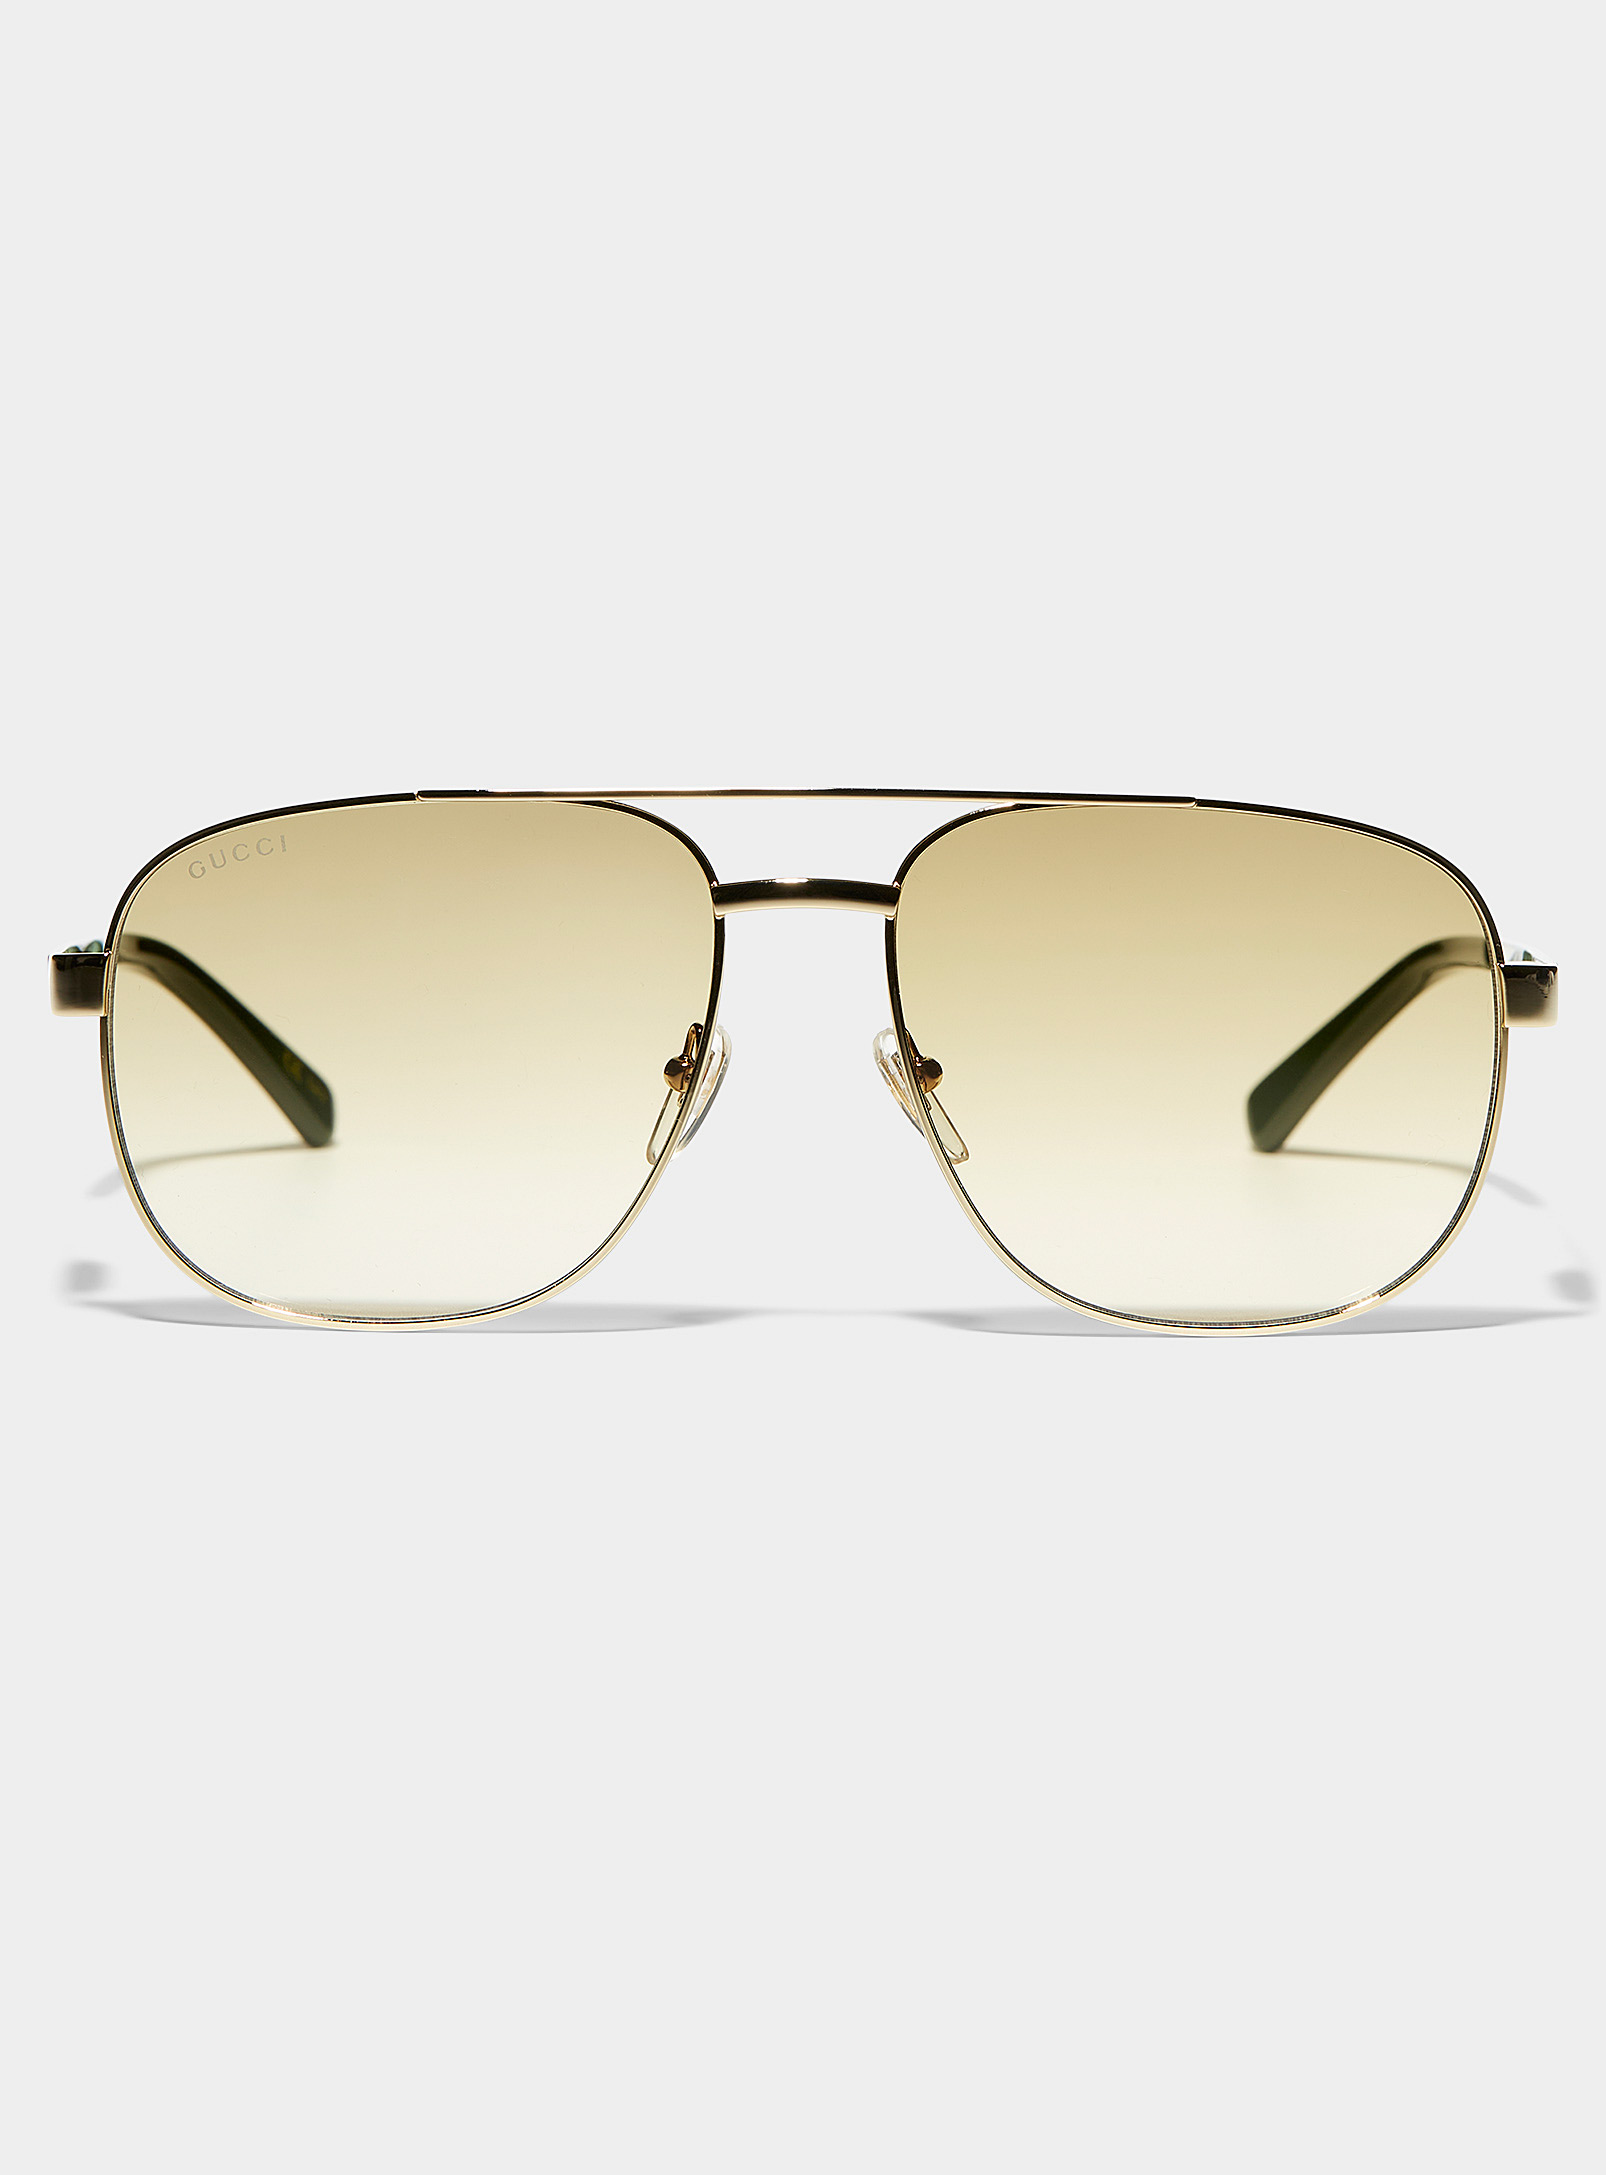 Gucci Aviator Style Golden Sunglasses In Neutral Modesens